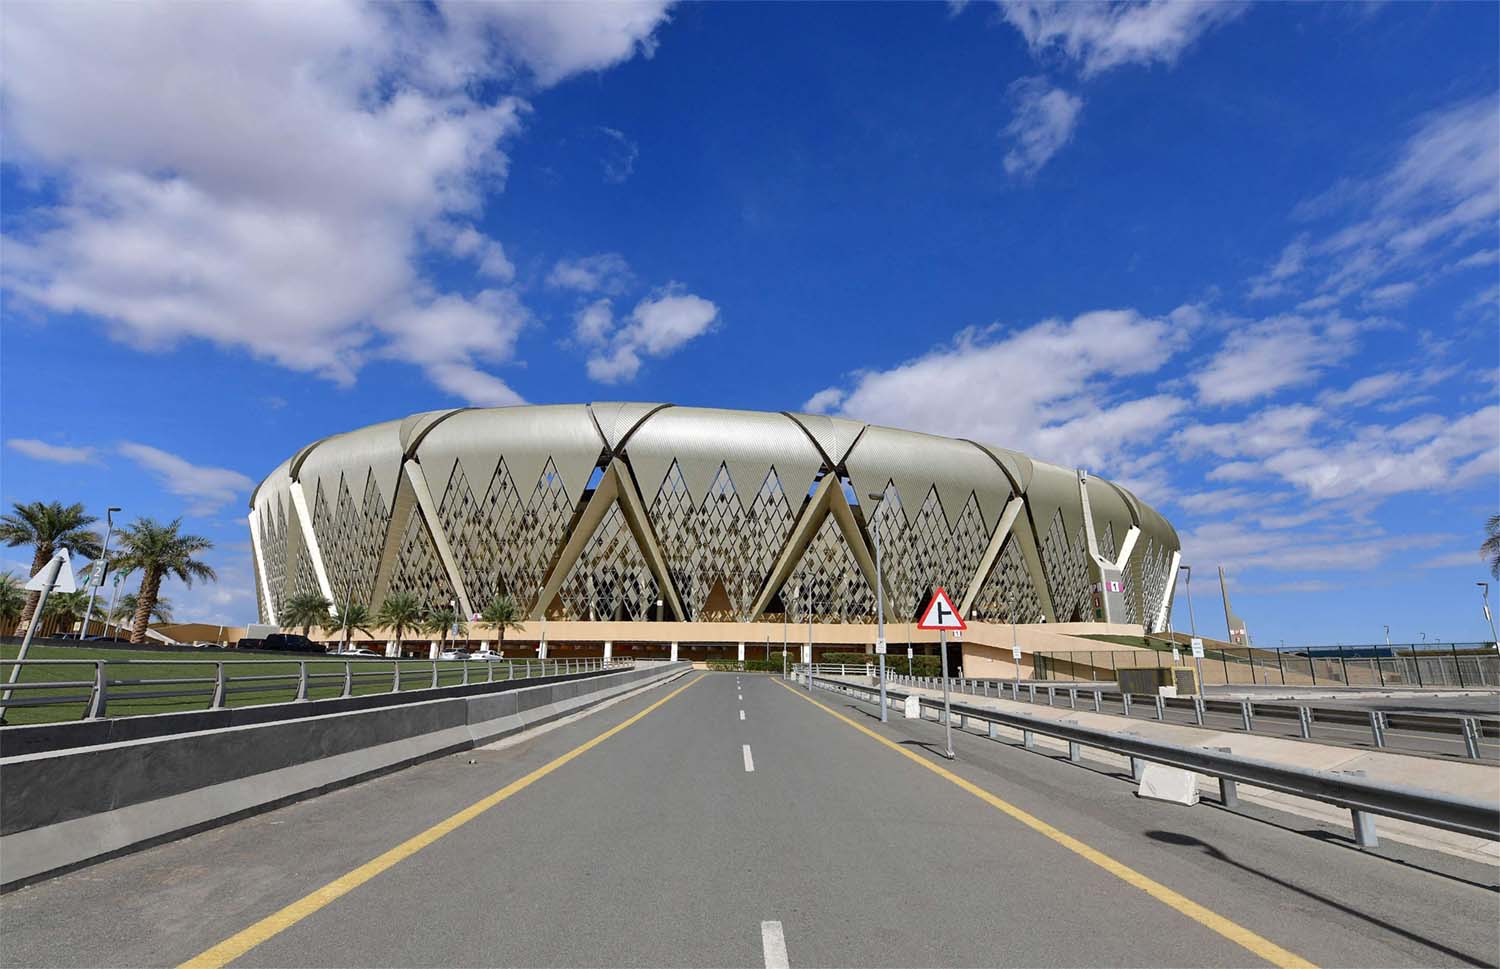 Saudi Arabia's King Abdullah Sports City stadium in Jeddah